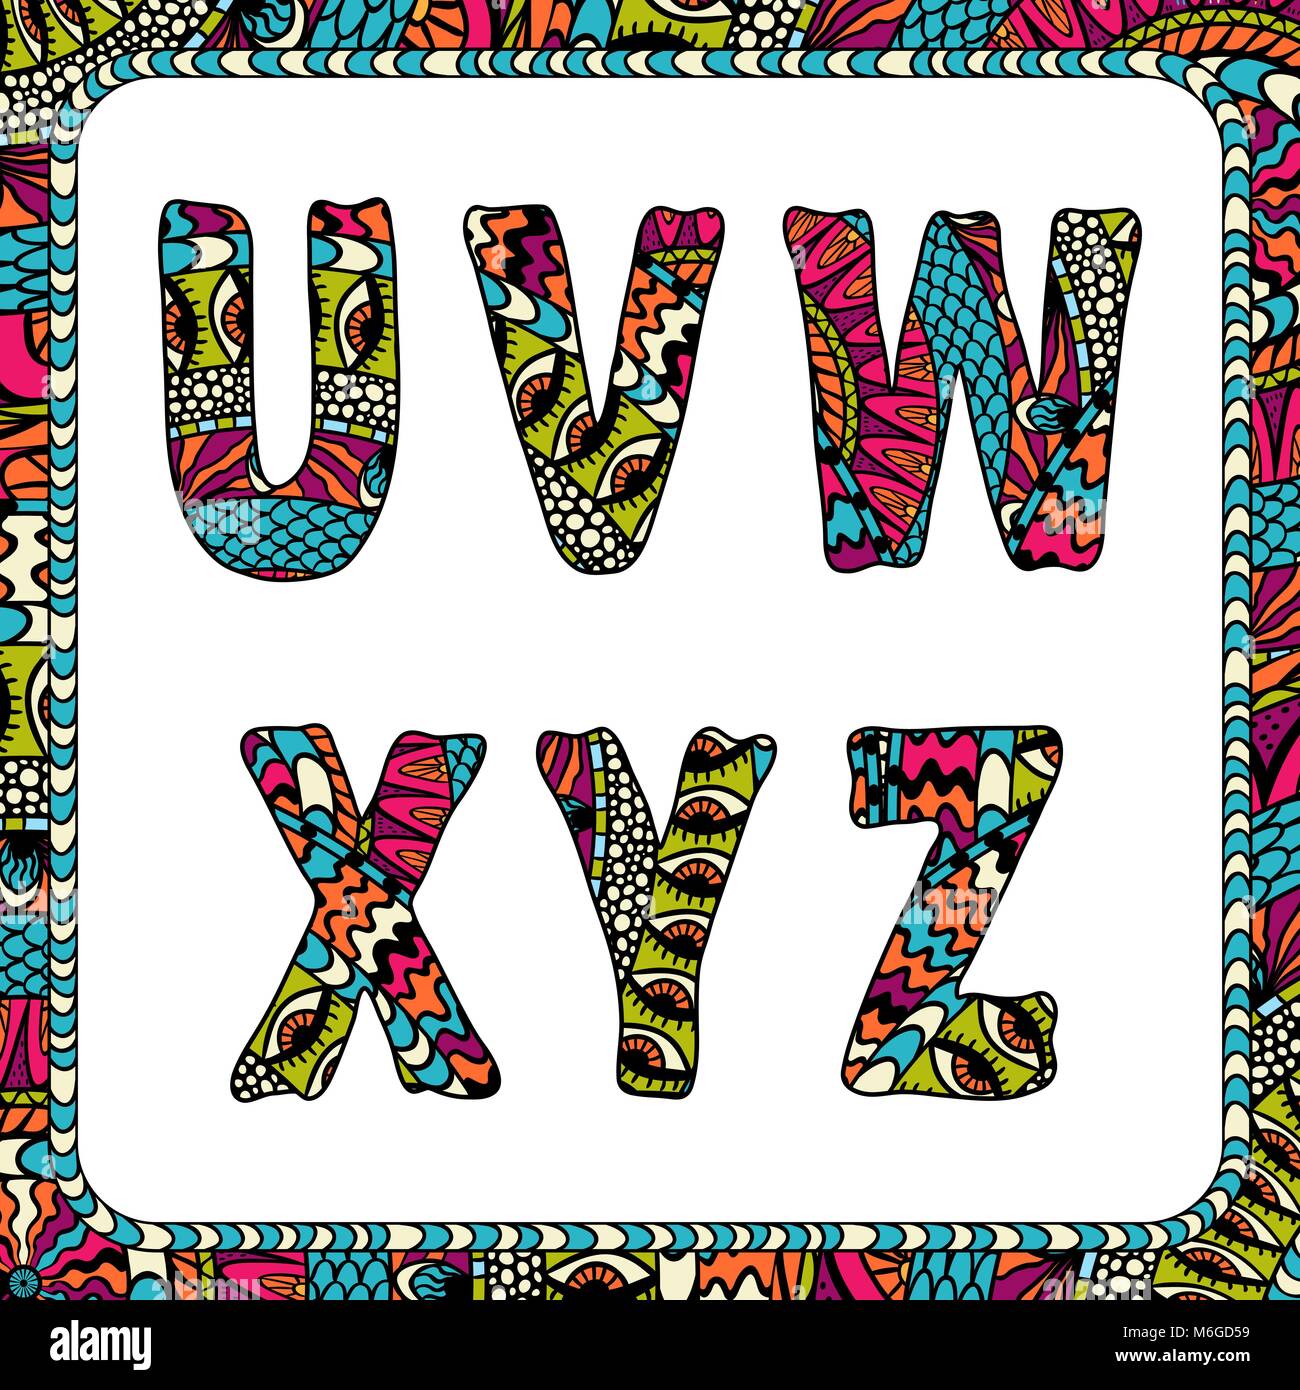 U V W X Y Z Letters Of Alphabet With Ethnic Motifs Stock Vector Image Art Alamy